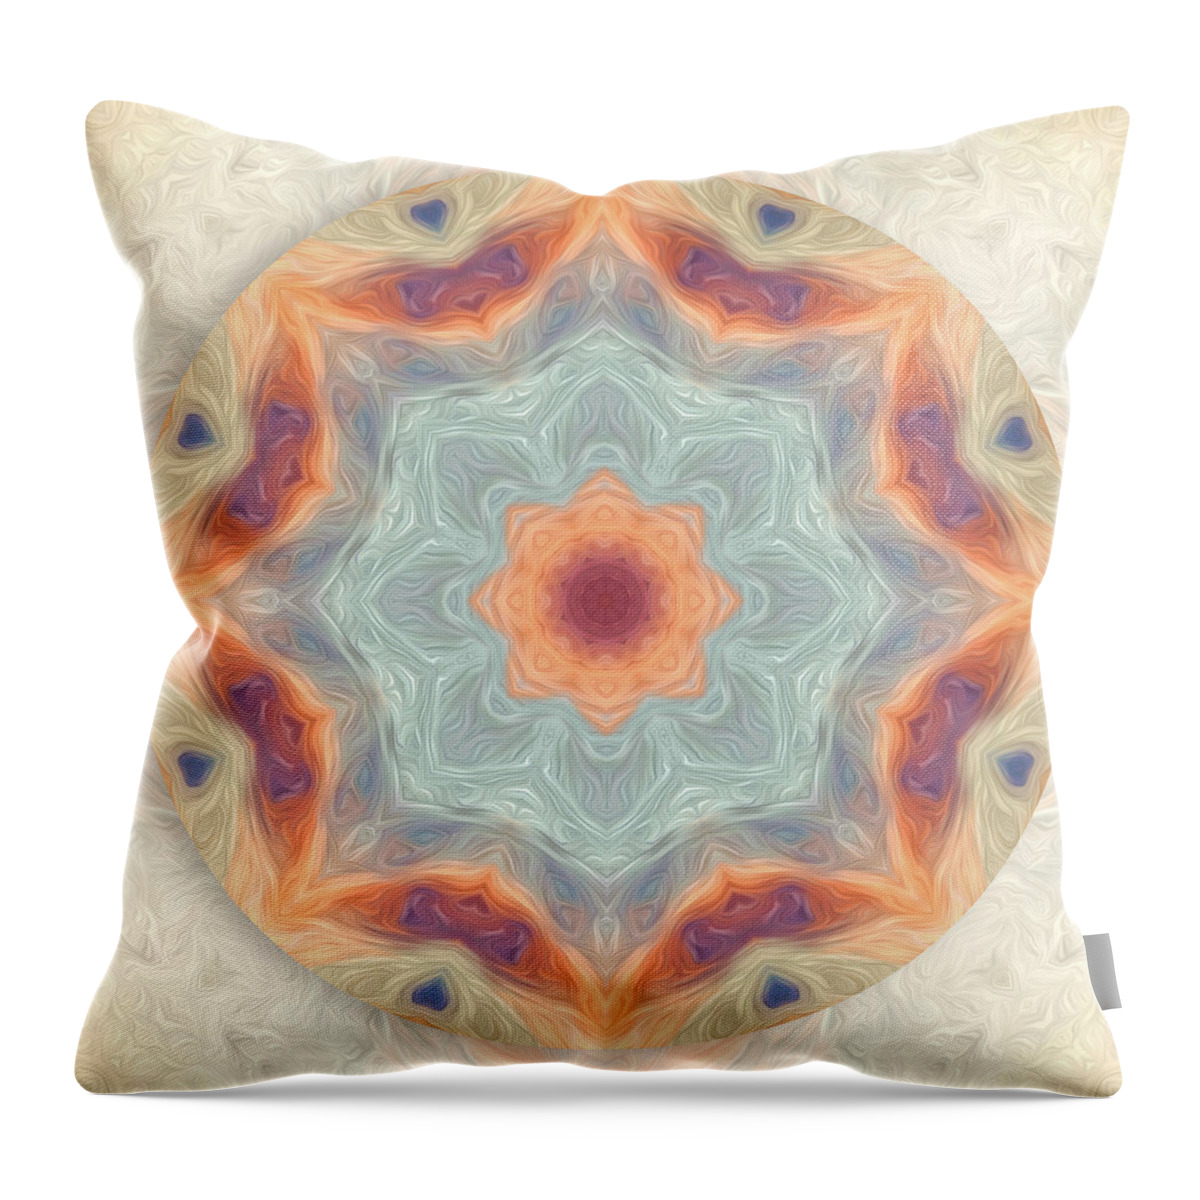 Mandala Throw Pillow featuring the digital art Swirls of Love Mandala by Beth Venner